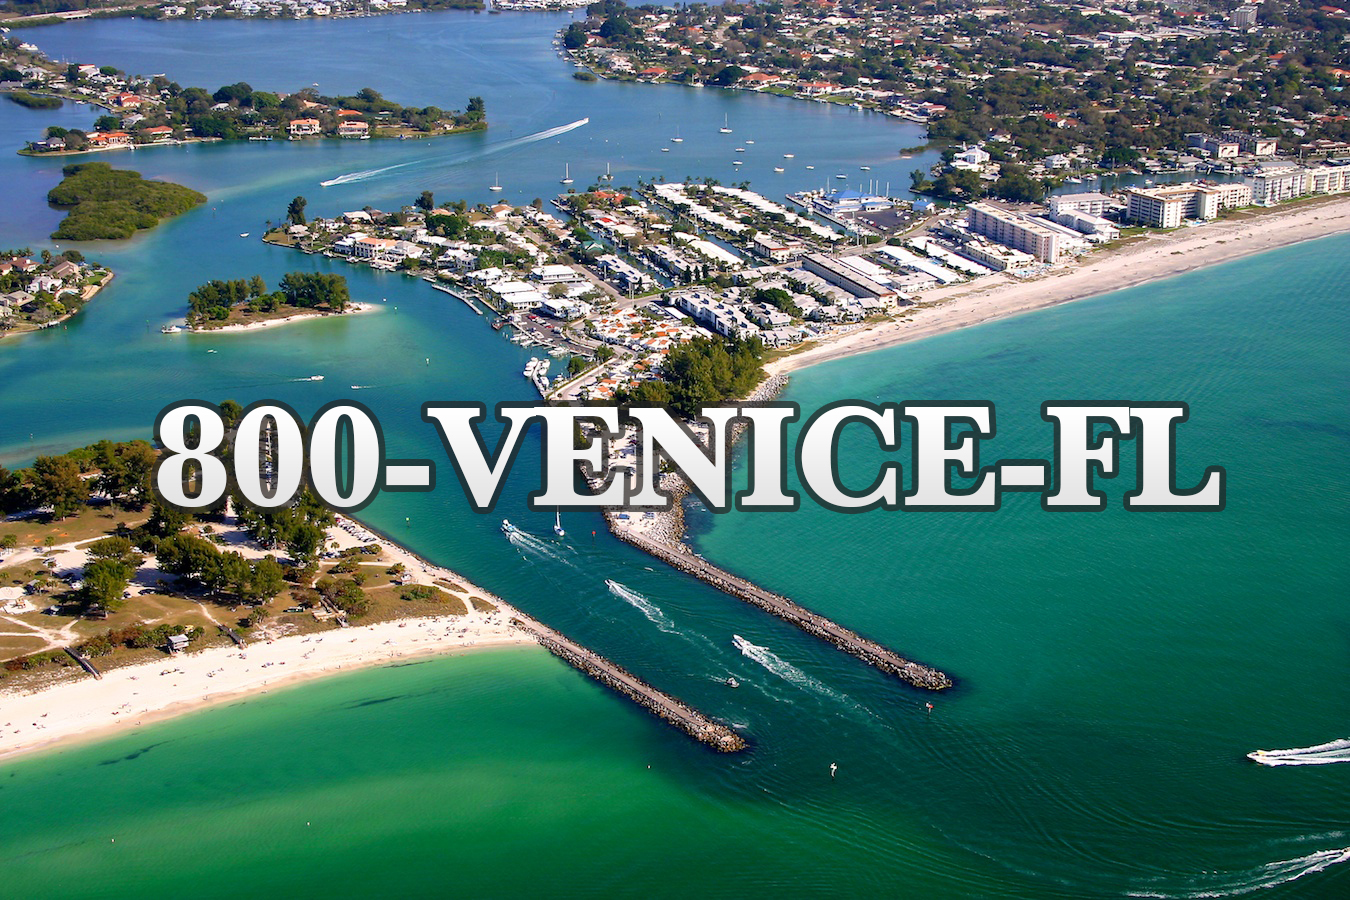 Venice Florida Jetty aerial view using 1-800-VENICE-FL